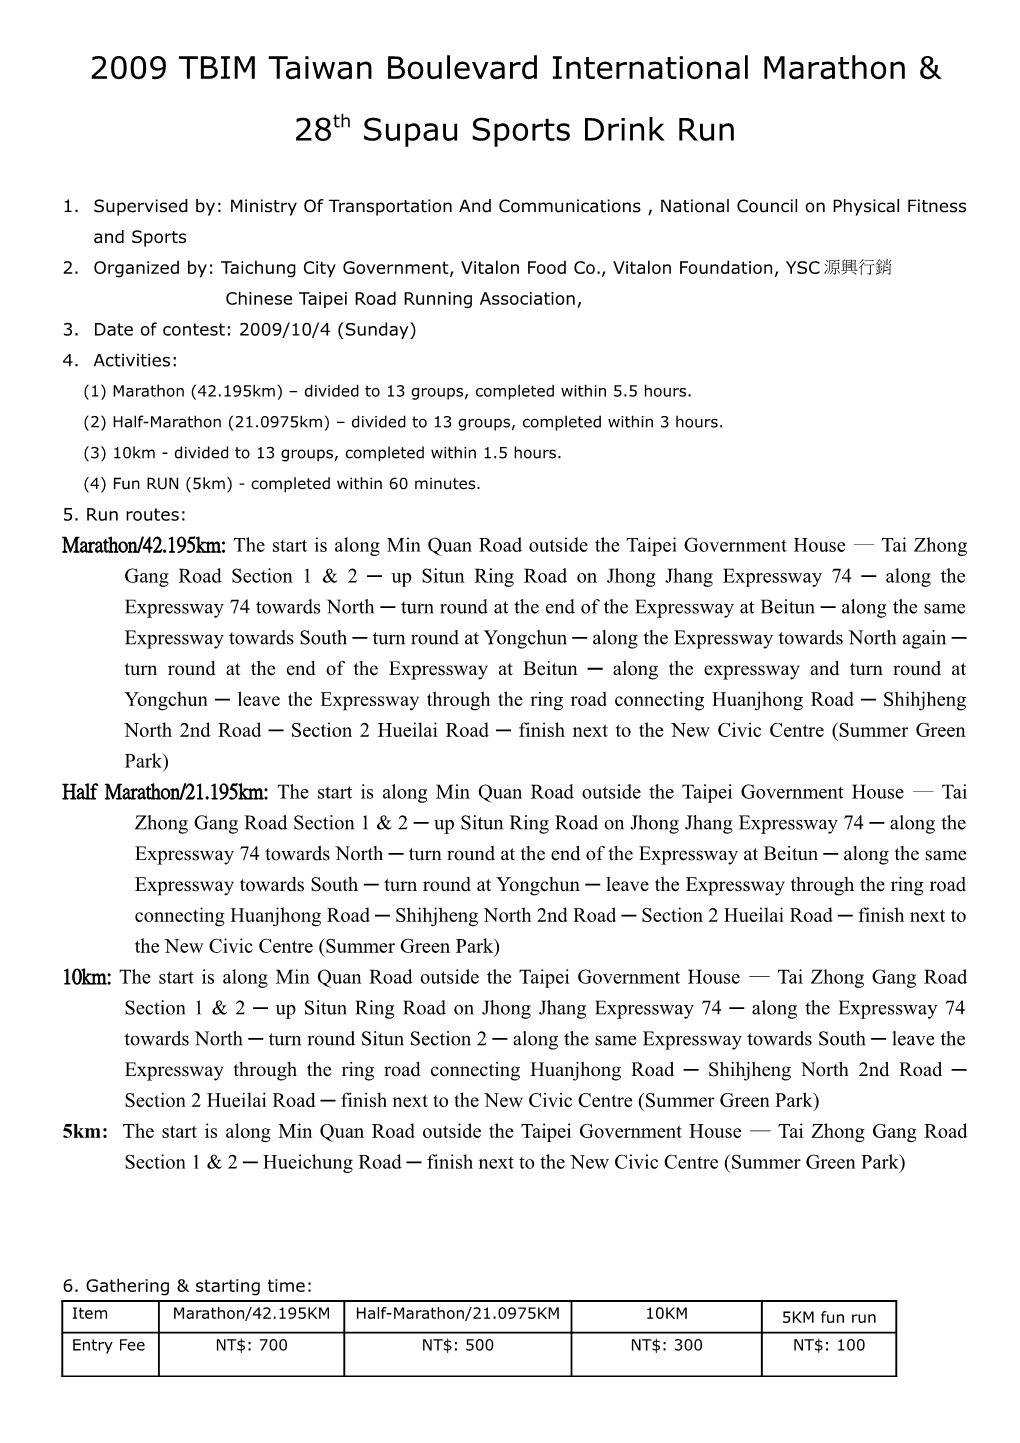 Rules of 2004 ING Taipei International Marthon